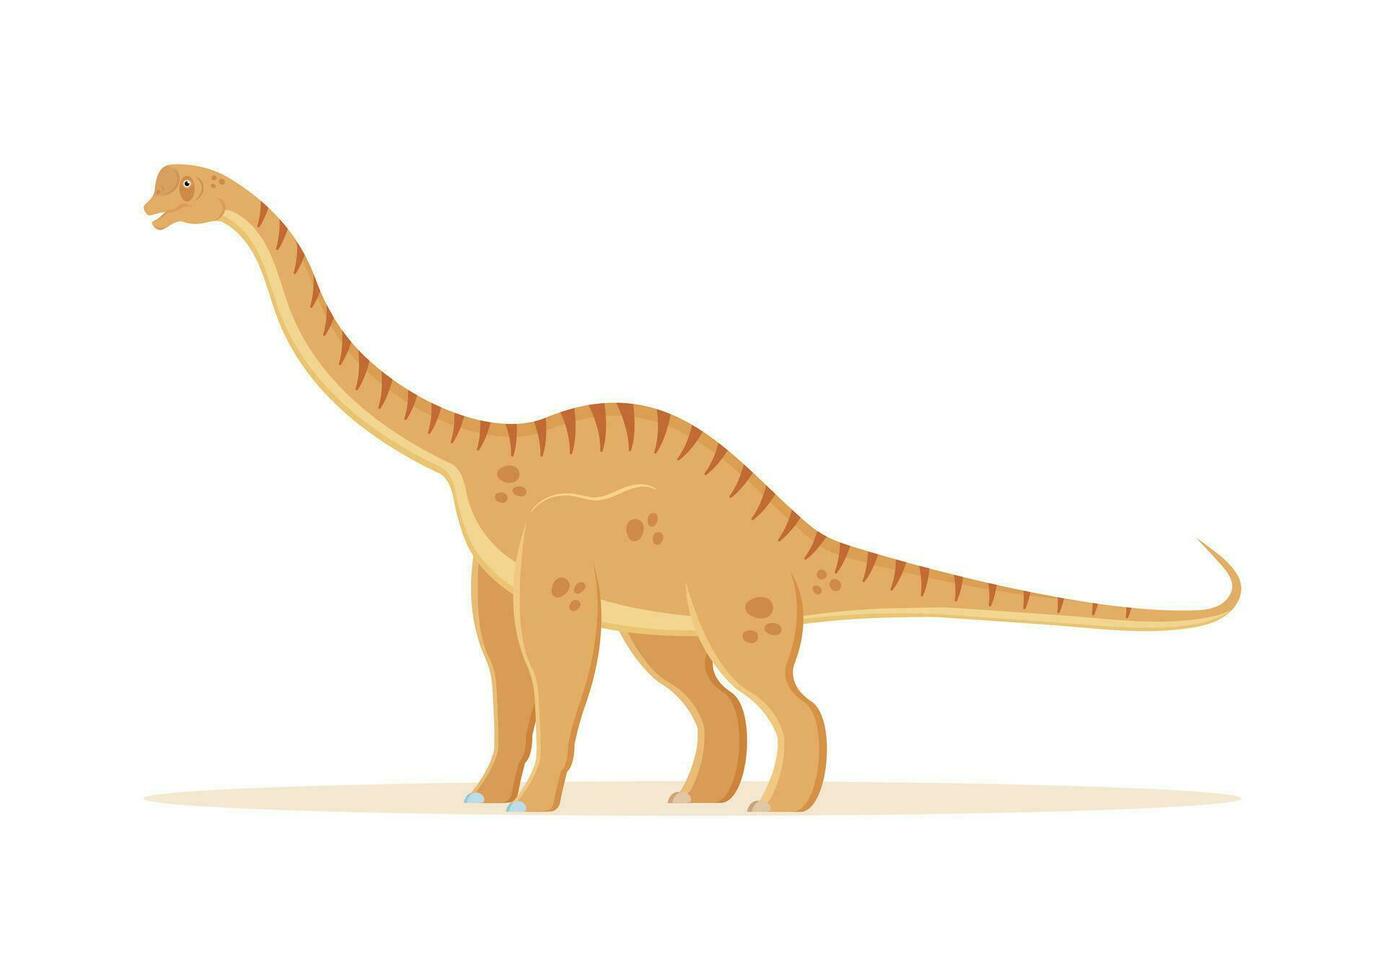 europasaurus dinosaure dessin animé personnage vecteur illustration.jpg